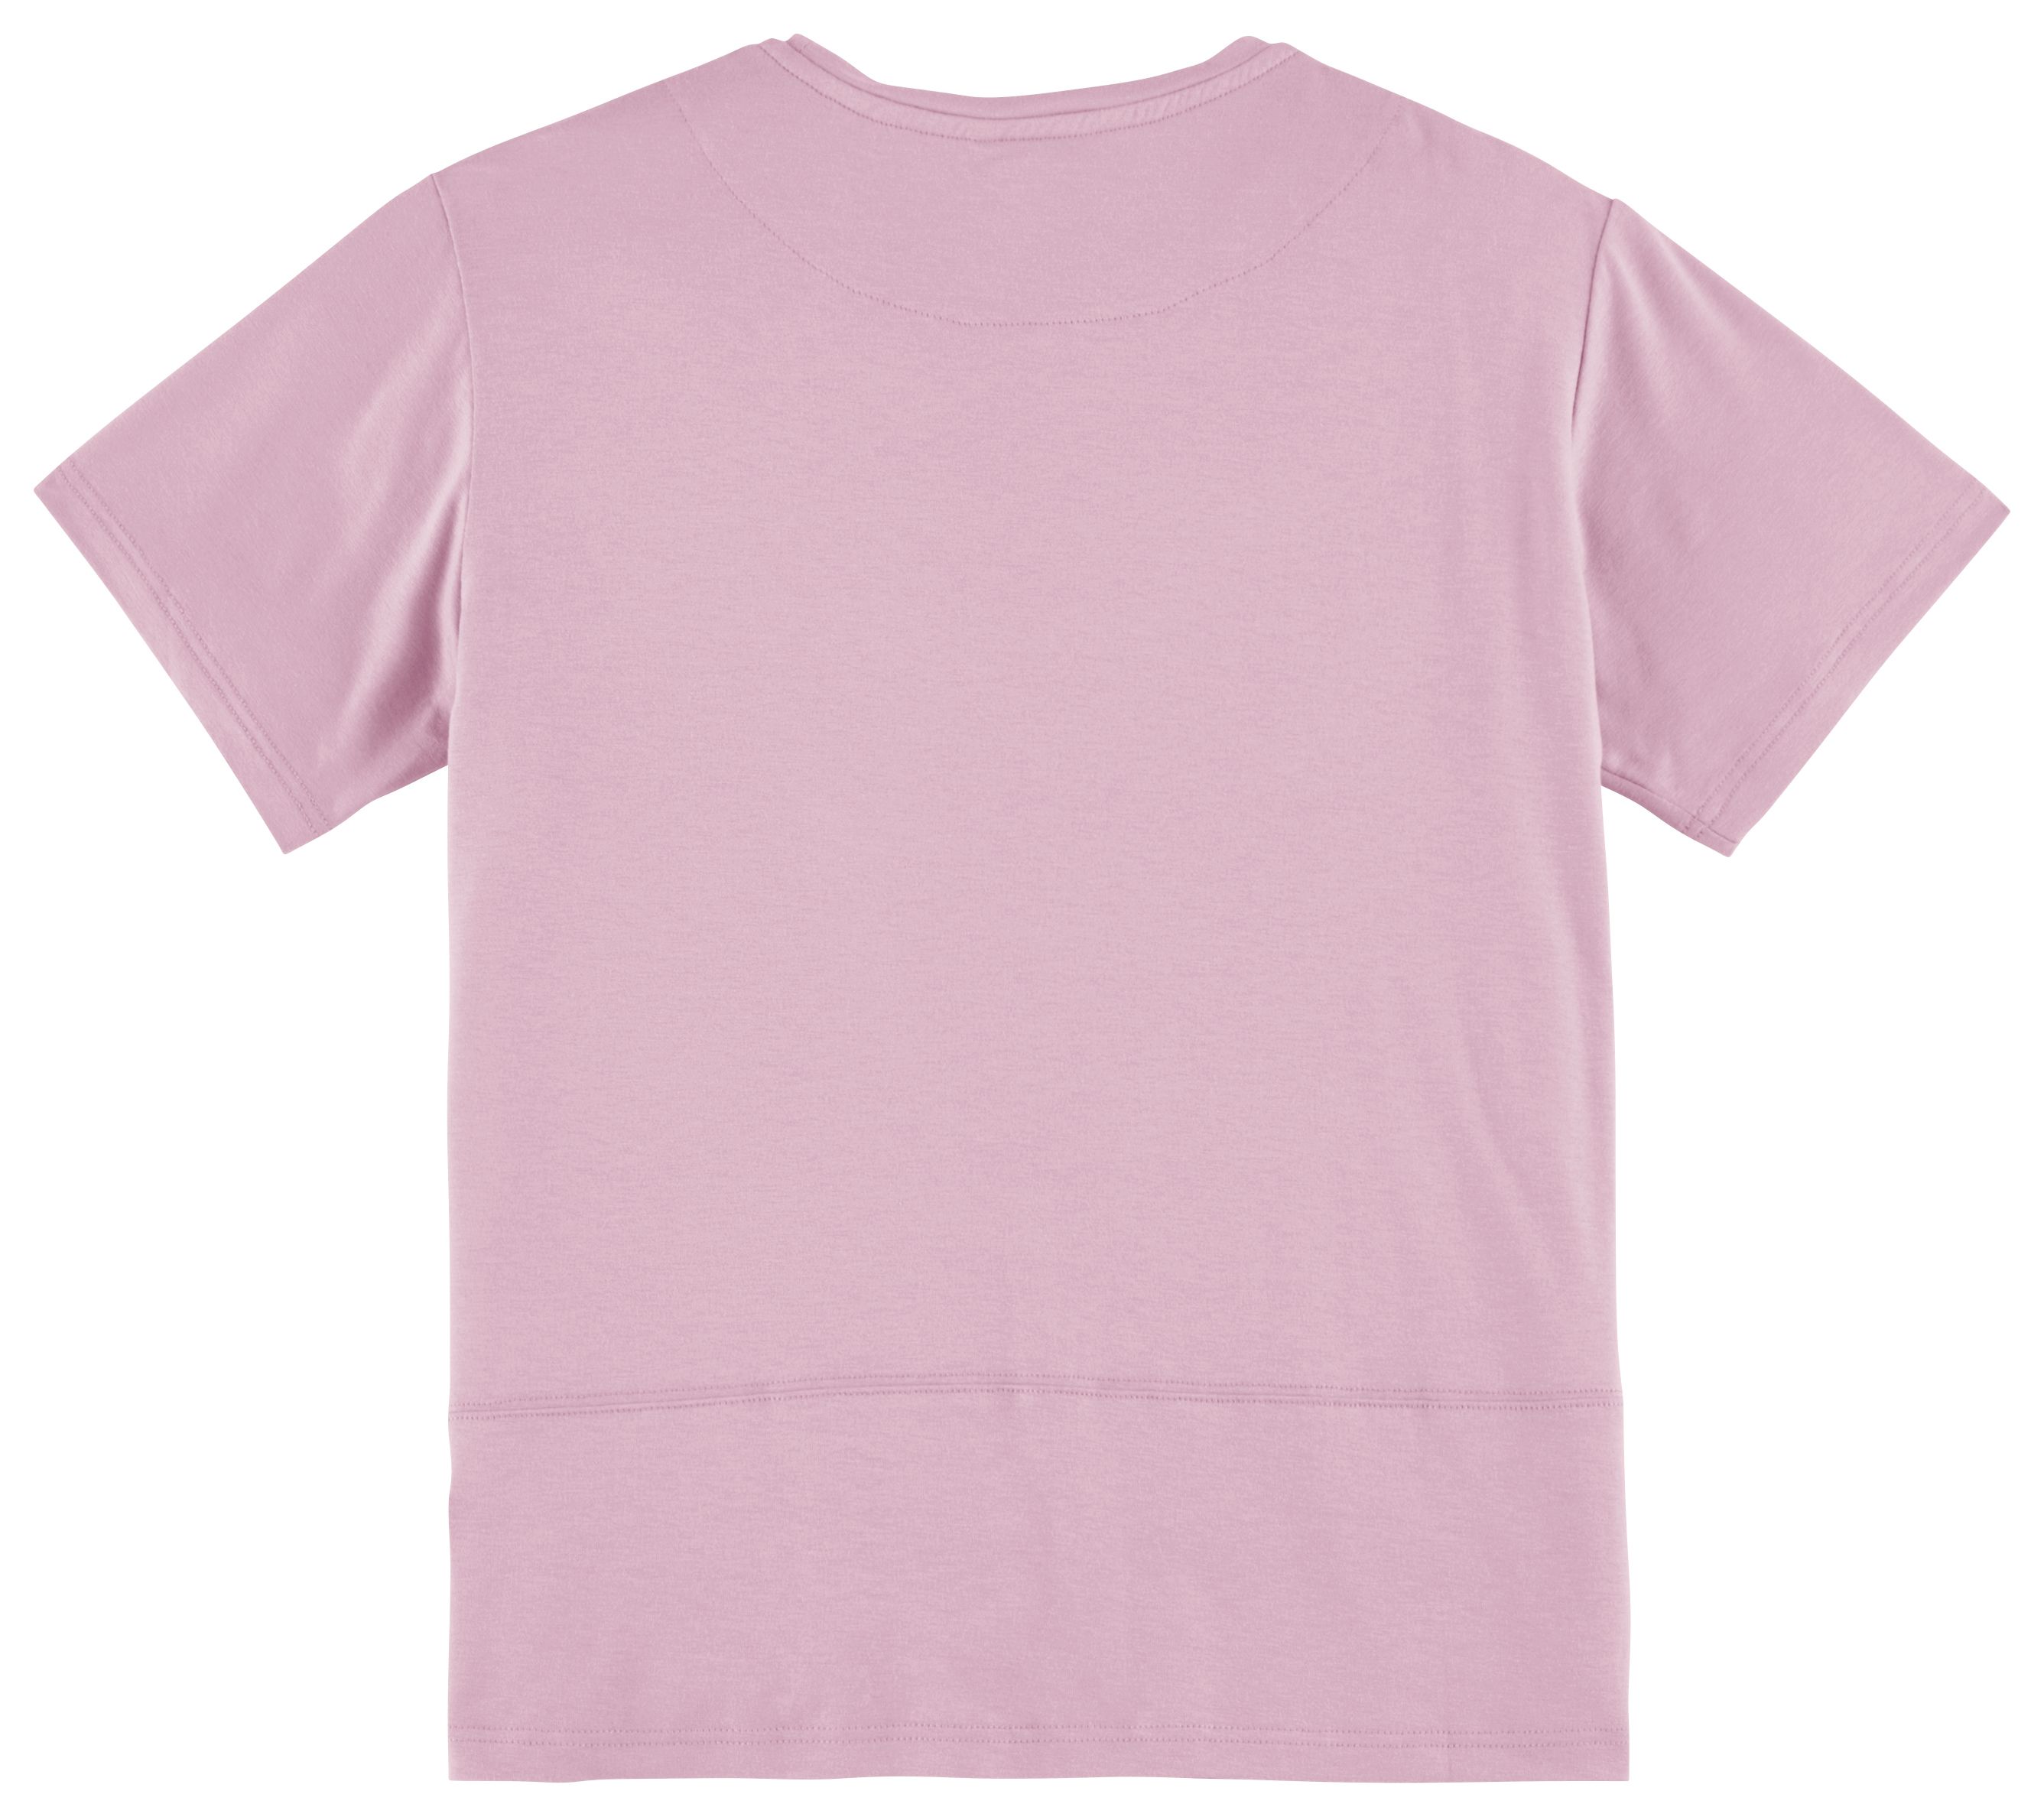 Die Rückseite des rosa Emilia-Shirts